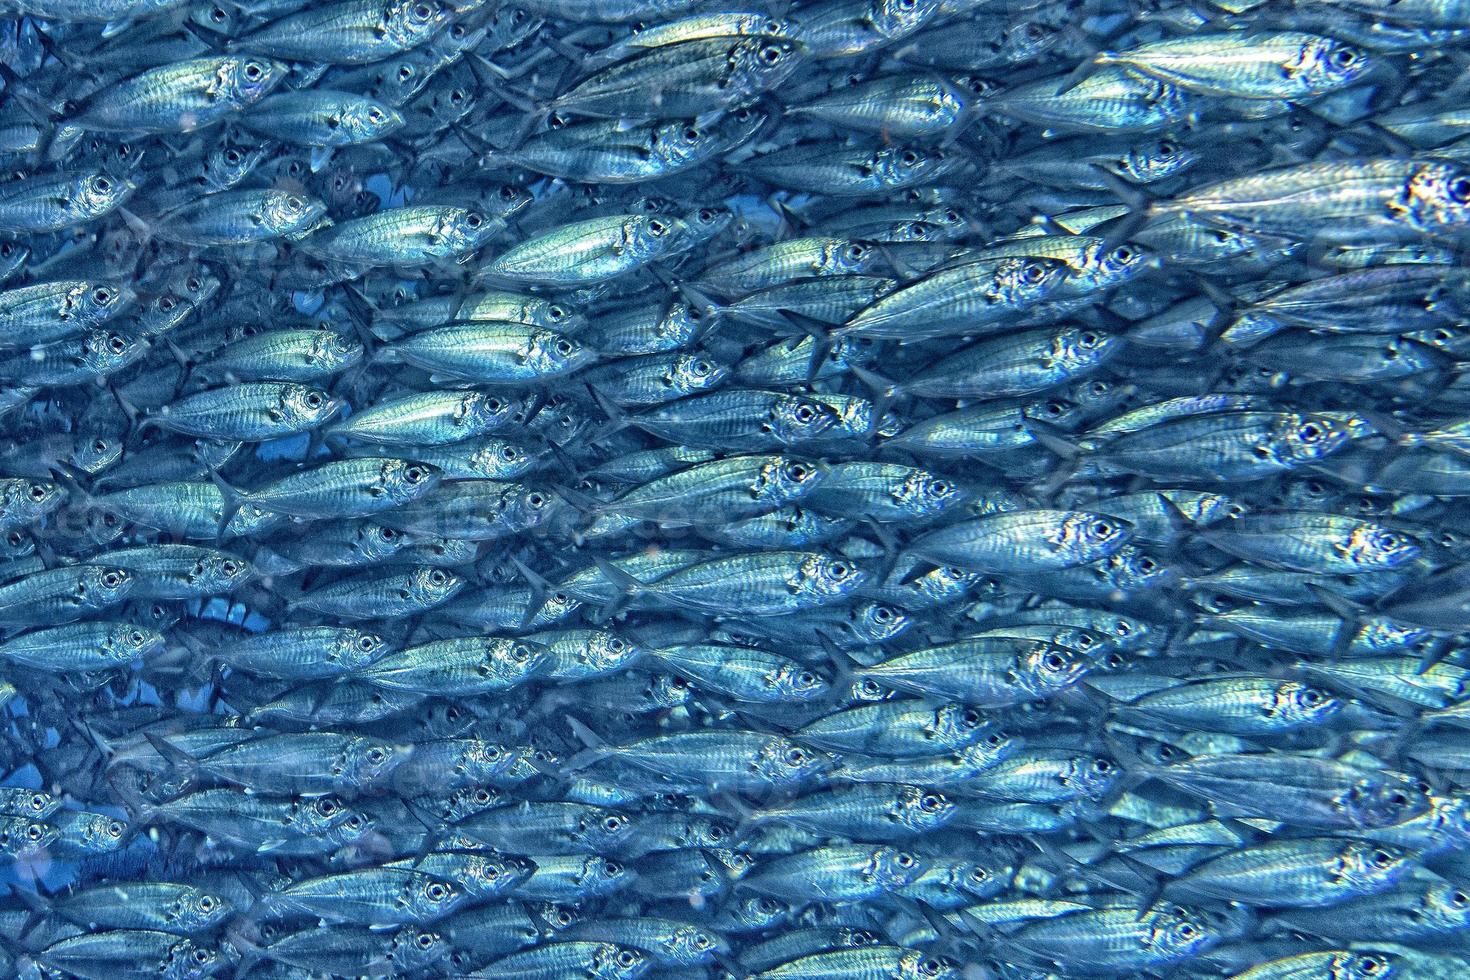 Inside a school of fish underwater photo